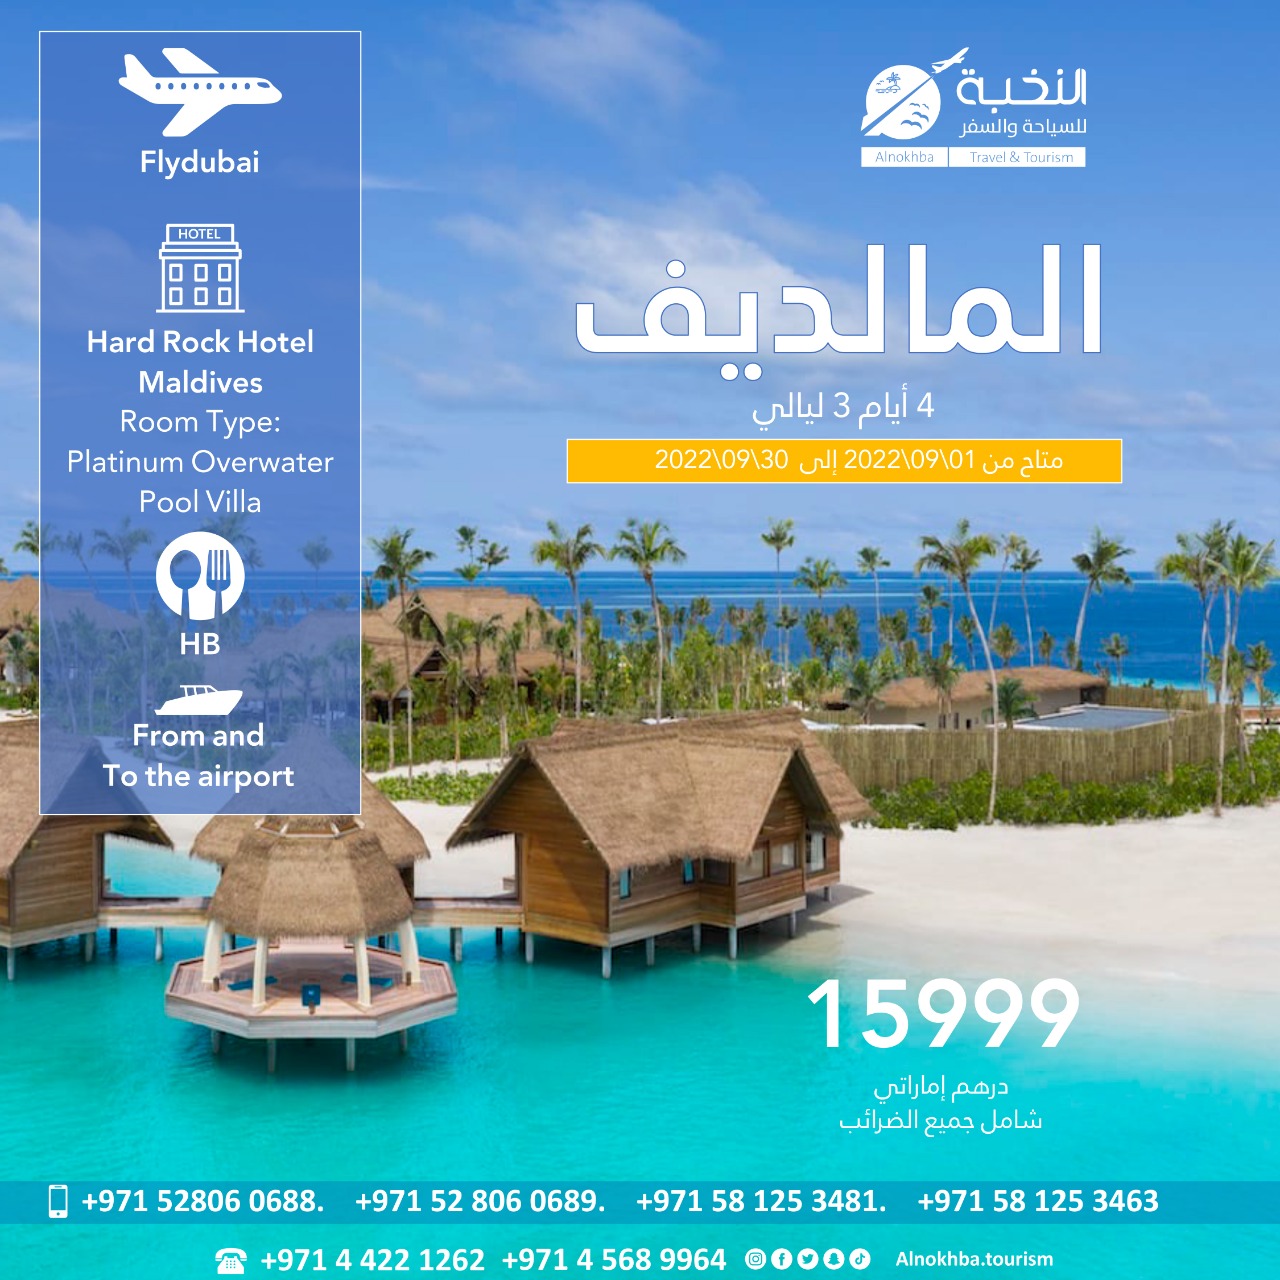 HideAway In Maldives - Hard Rock Hotel Maldives:- Platinum Overwater Pool Villa - 4Days - 3Nights